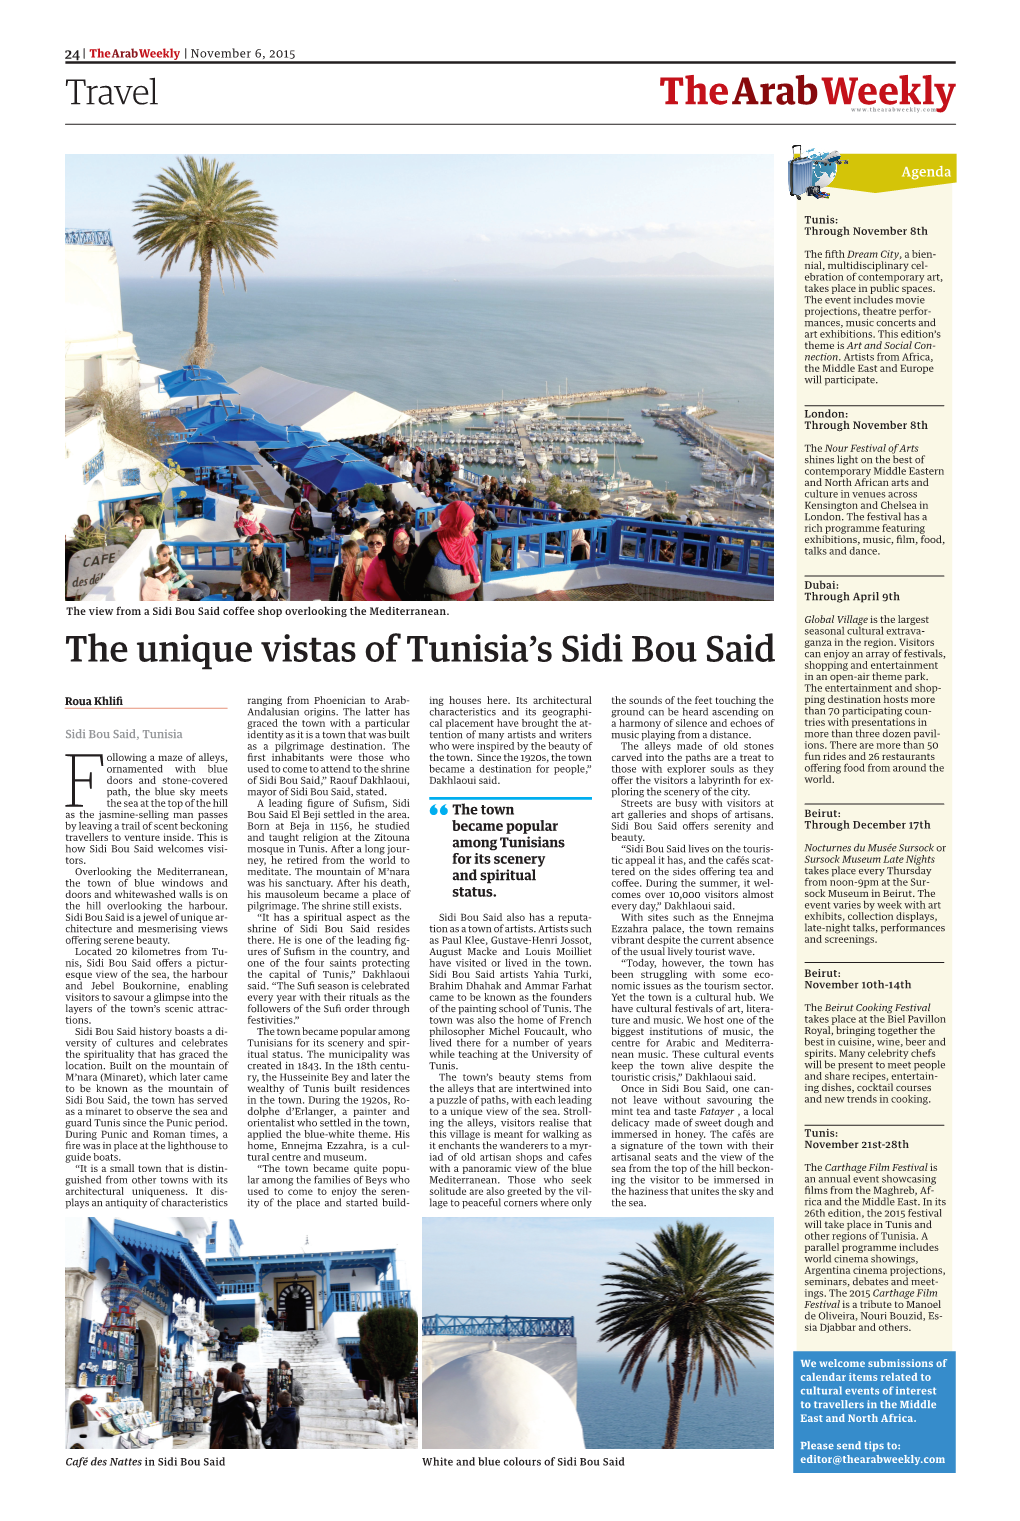 Travel the Unique Vistas of Tunisia's Sidi Bou Said